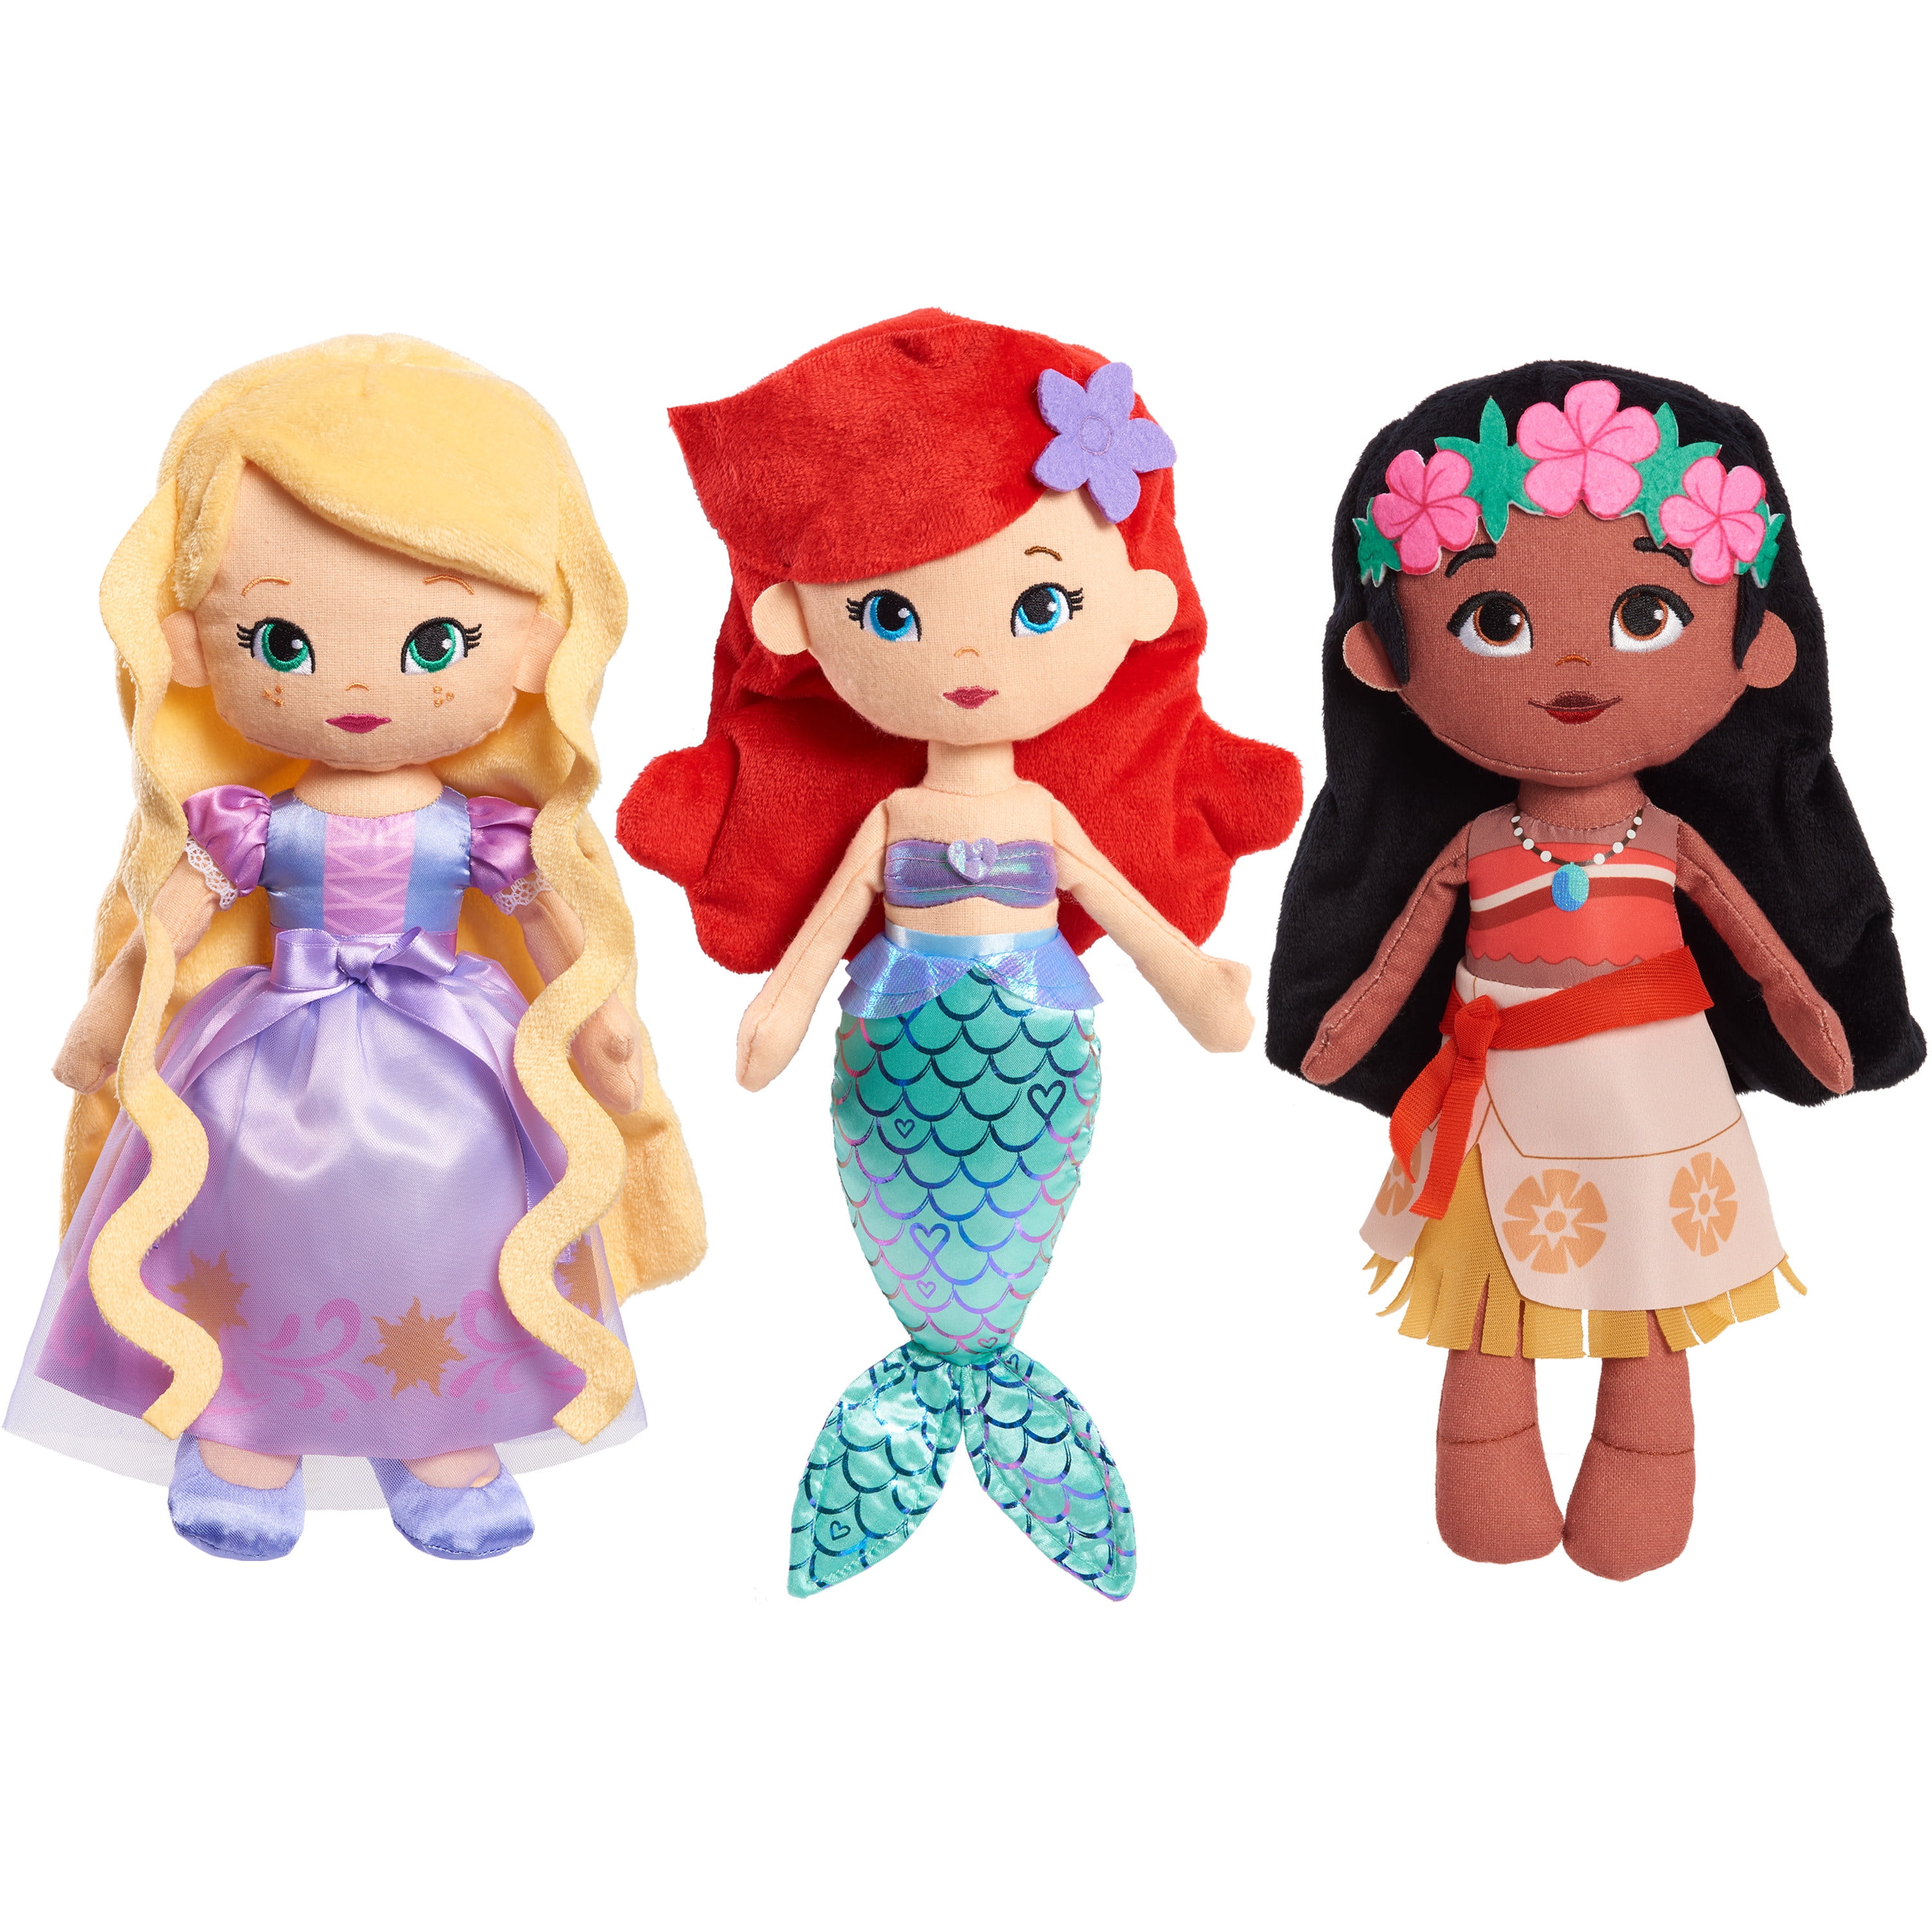 Plush dolls  Disney princess dolls, Plush dolls, Princess dolls